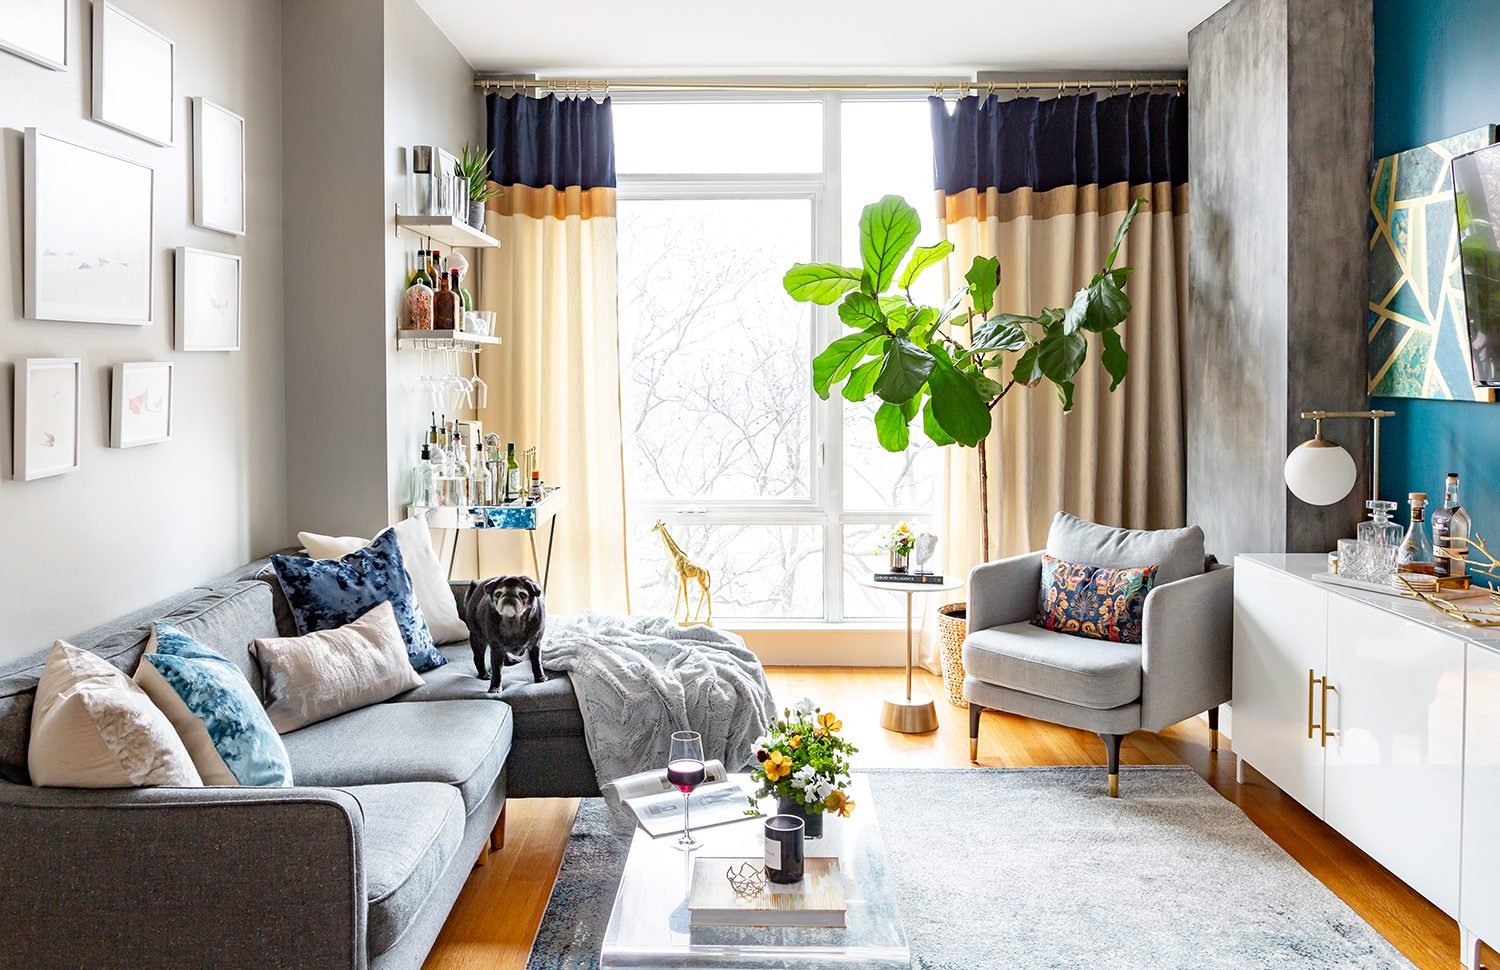 7 Apartment Design Ideas To Maximize Limited E Havenly Interior Blog